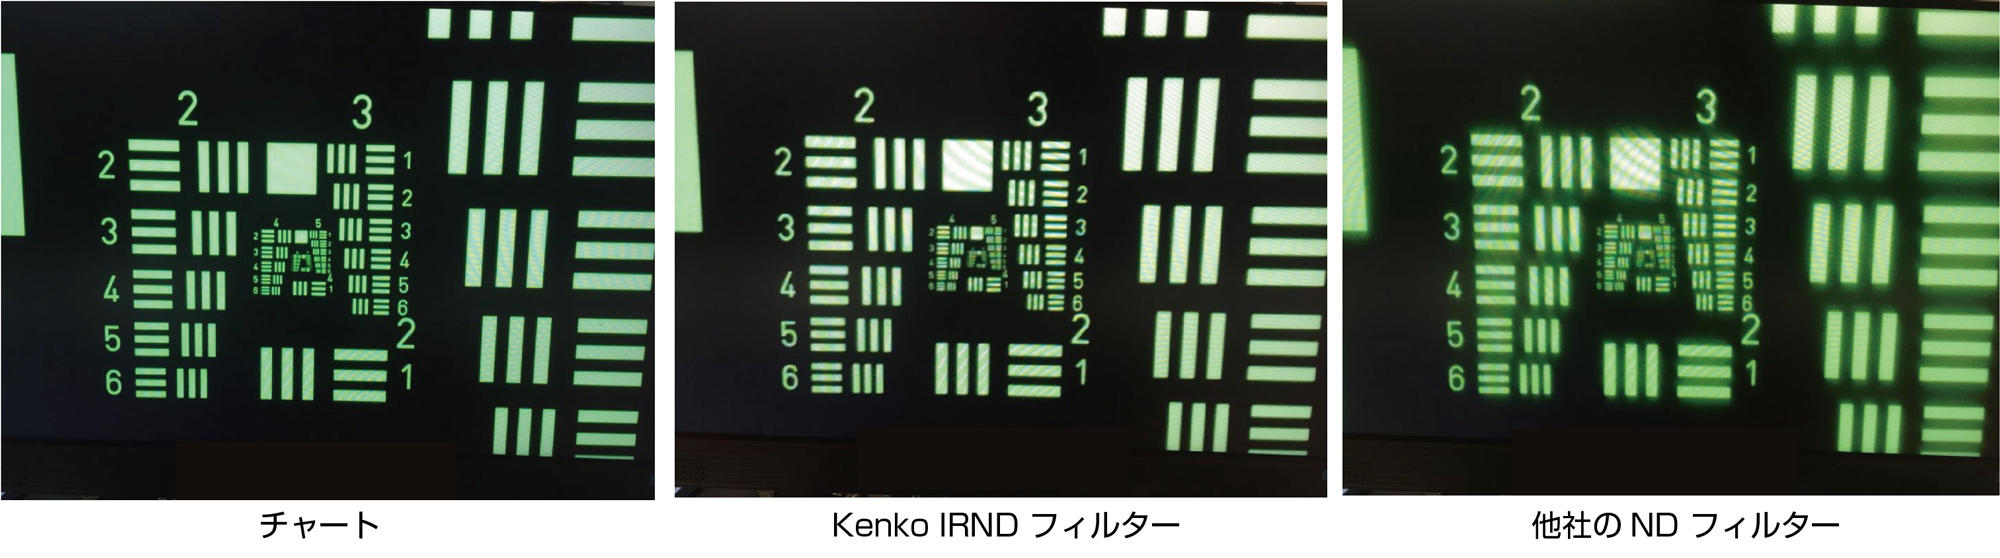 http://www.kenko-tokina.co.jp/imaging/filter/mt-images/4961607390993_resolution.jpg